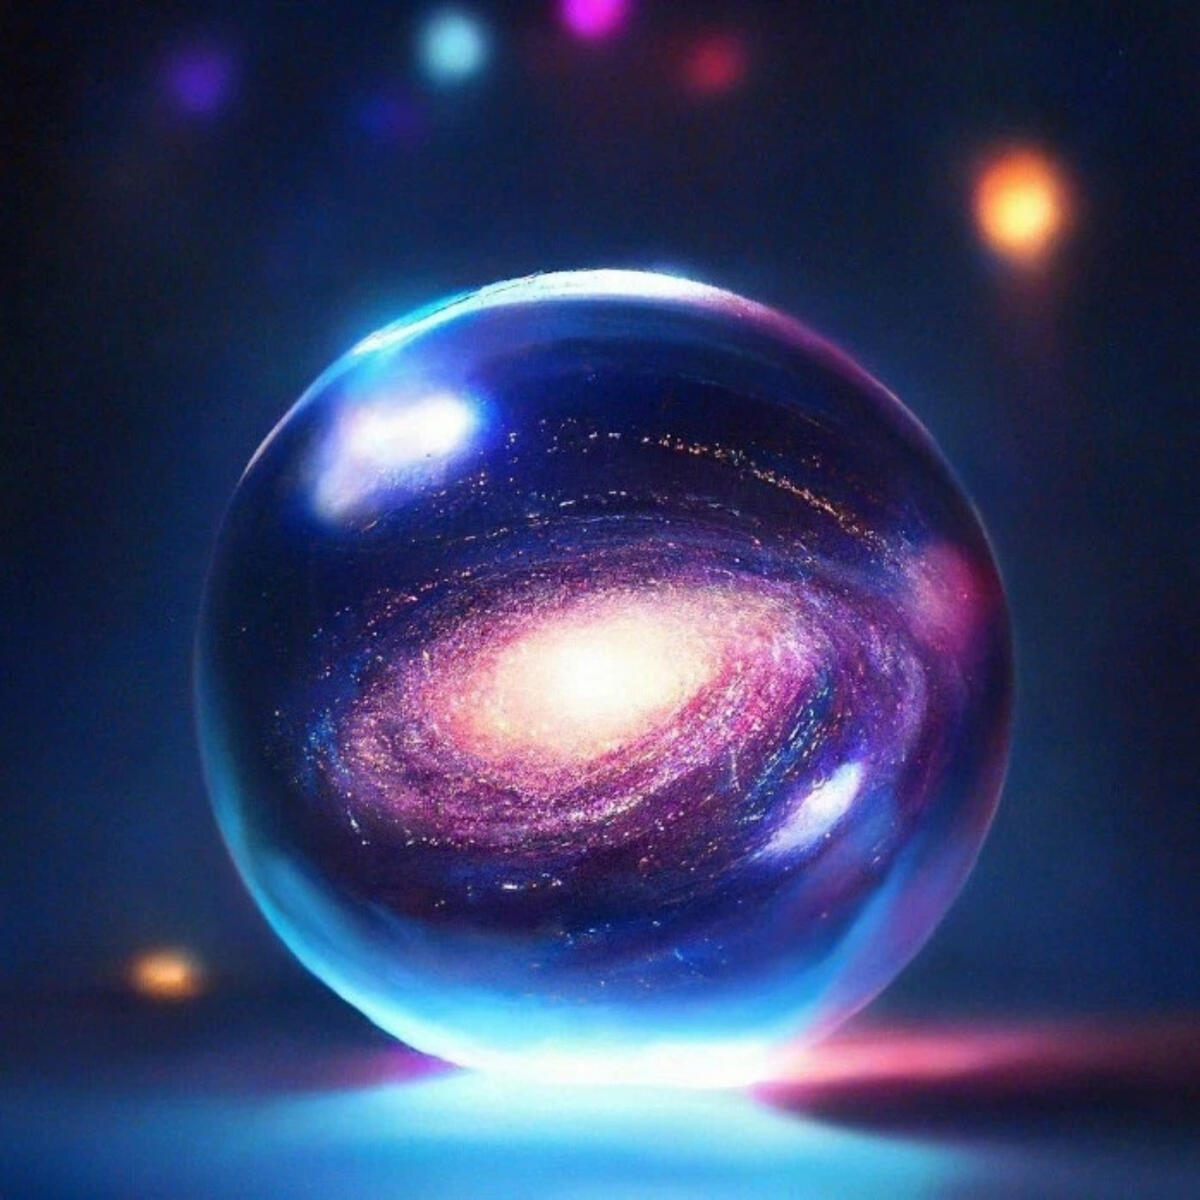 A galaxy in a glass ball